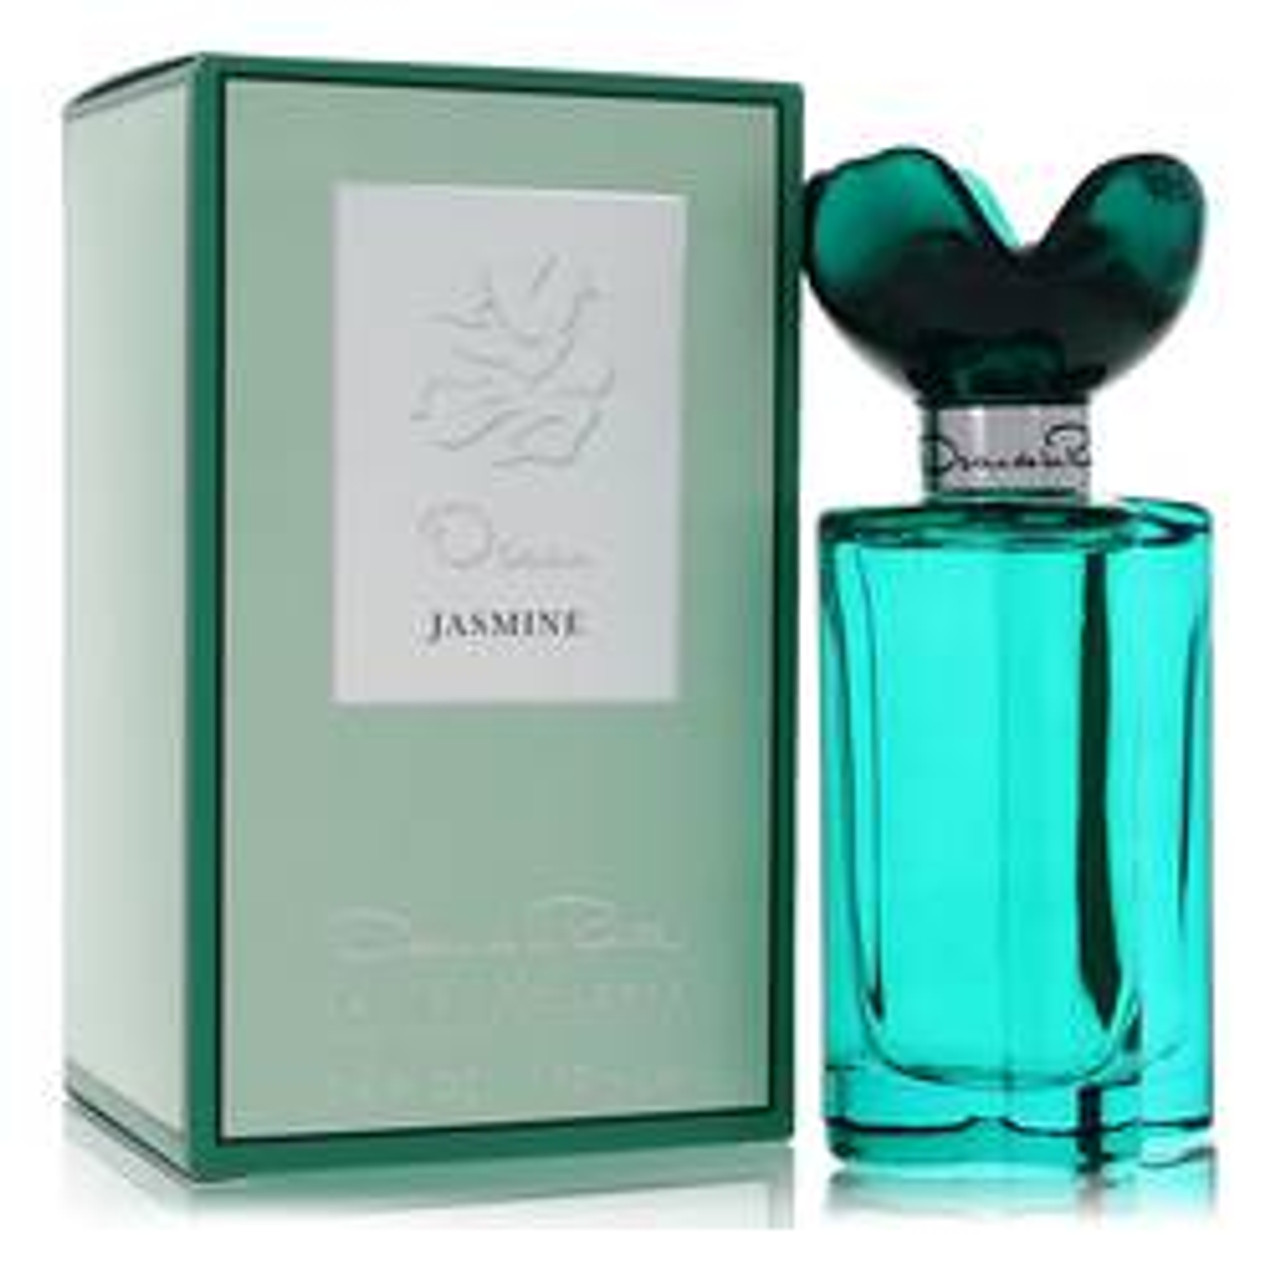 Oscar Jasmine Perfume By Oscar De La Renta Eau De Toilette Spray 3.4 oz for Women - [From 59.00 - Choose pk Qty ] - *Ships from Miami